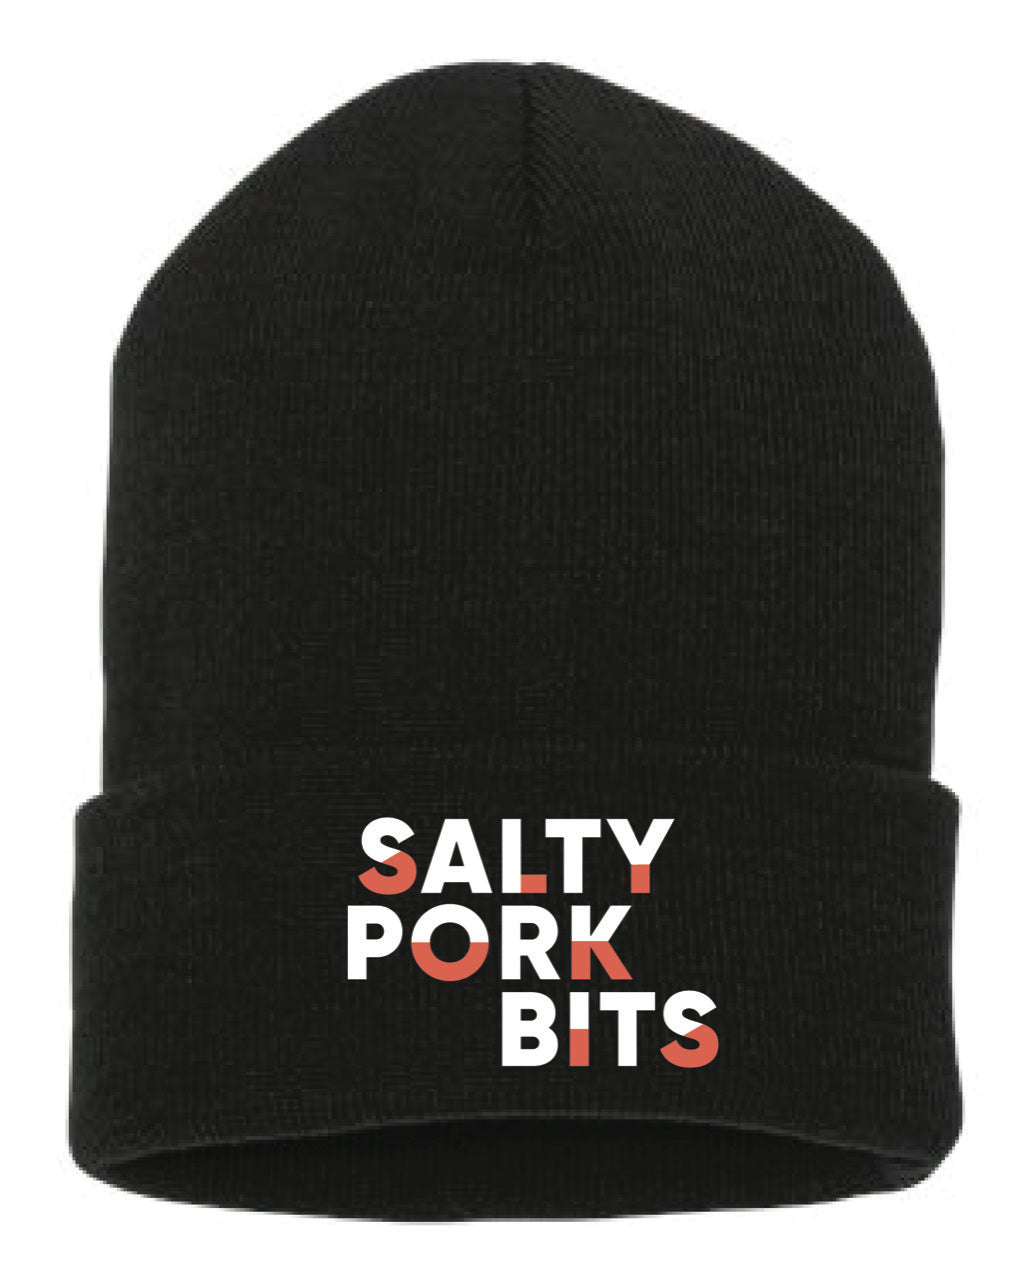 Salty Pork Bits Knit Cap